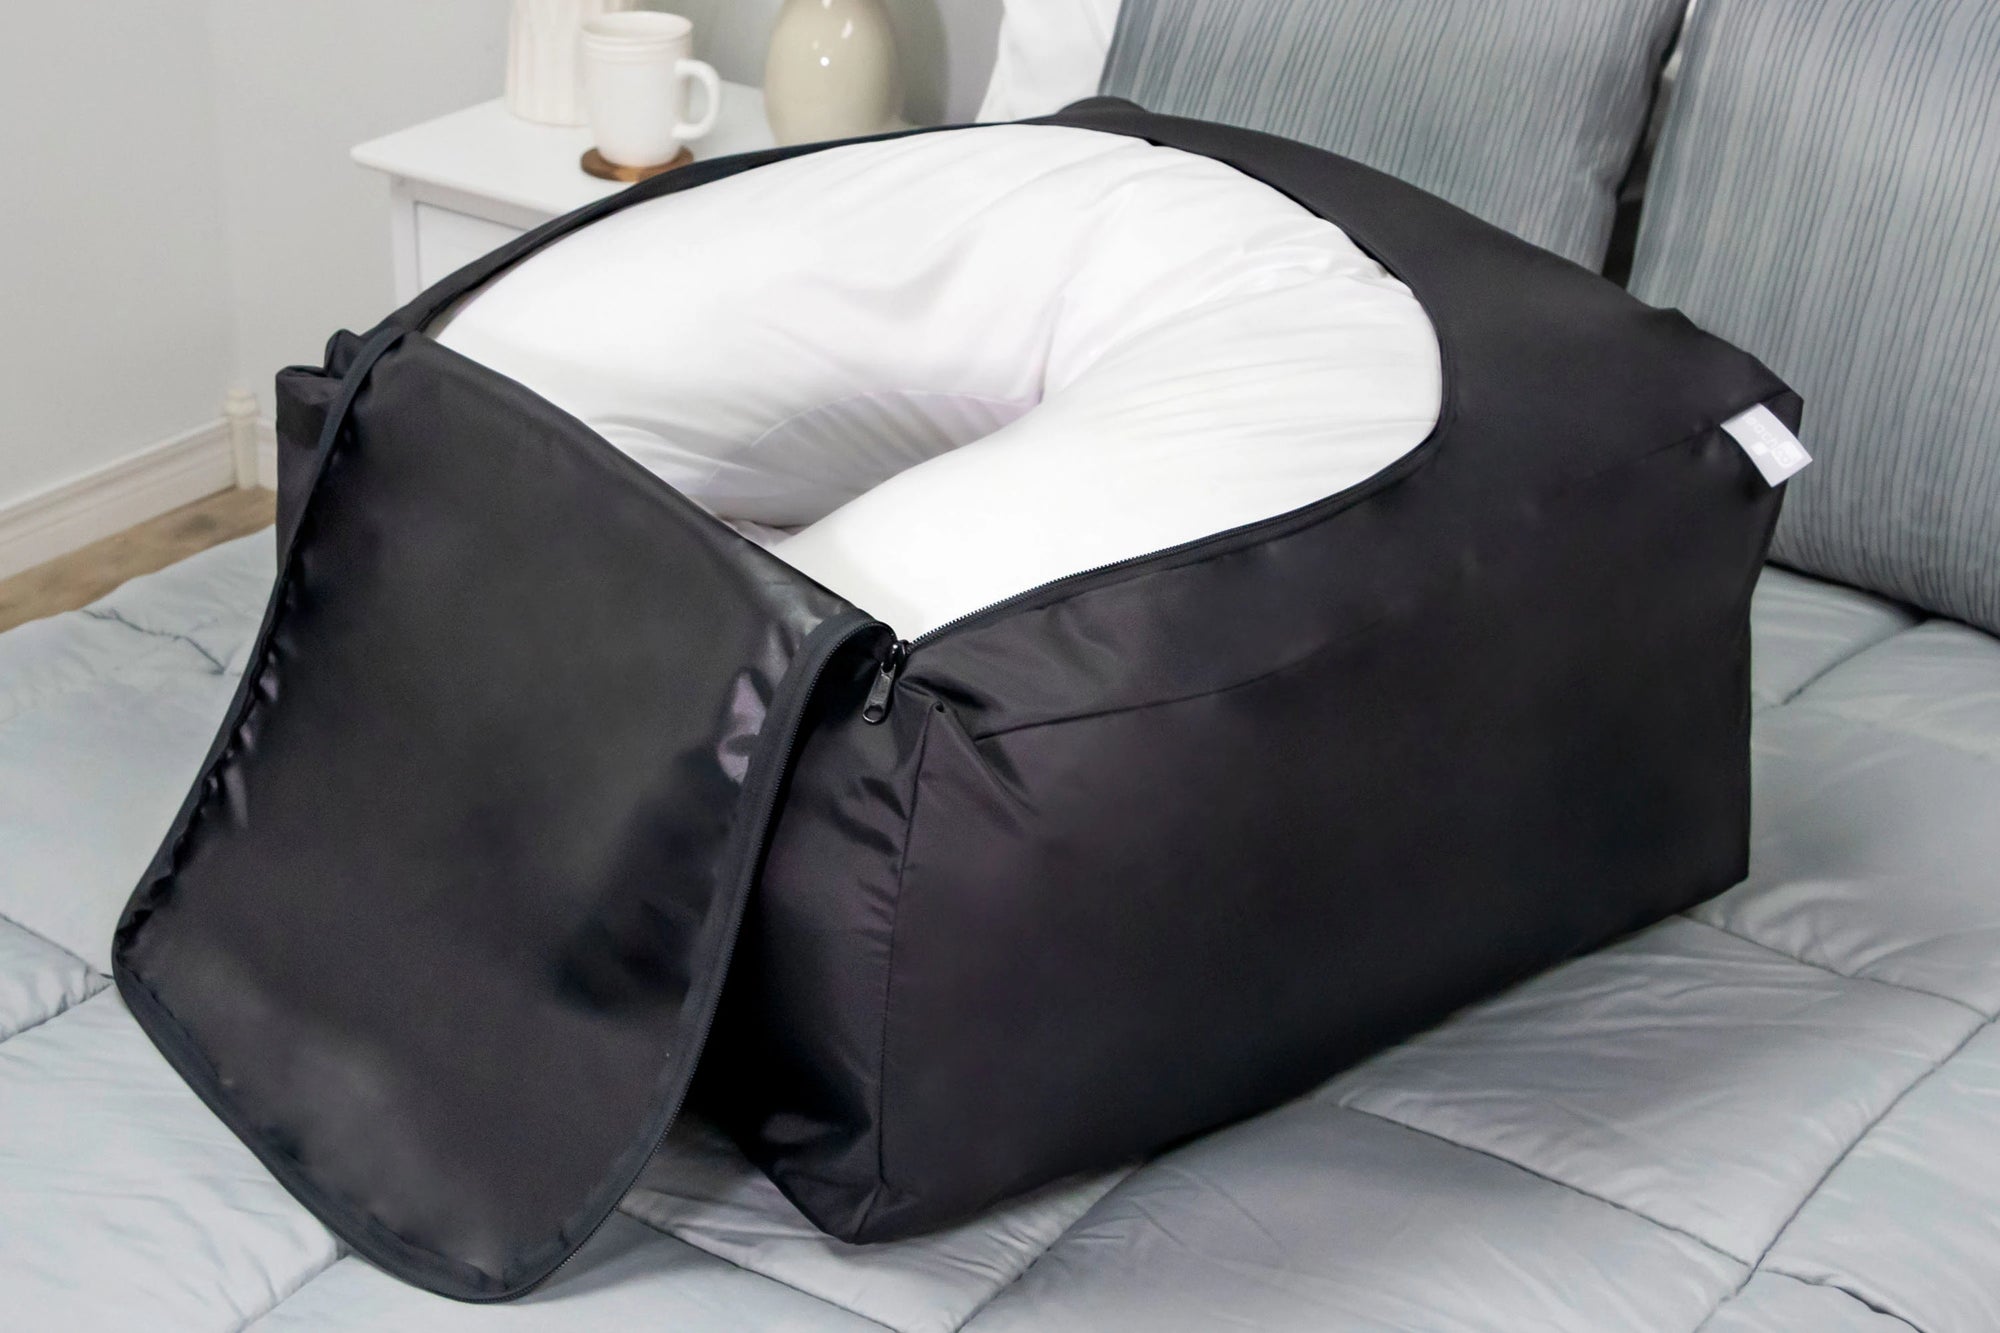 Travel and Storage Bag for Leachco Body Pillow in Nylon Black